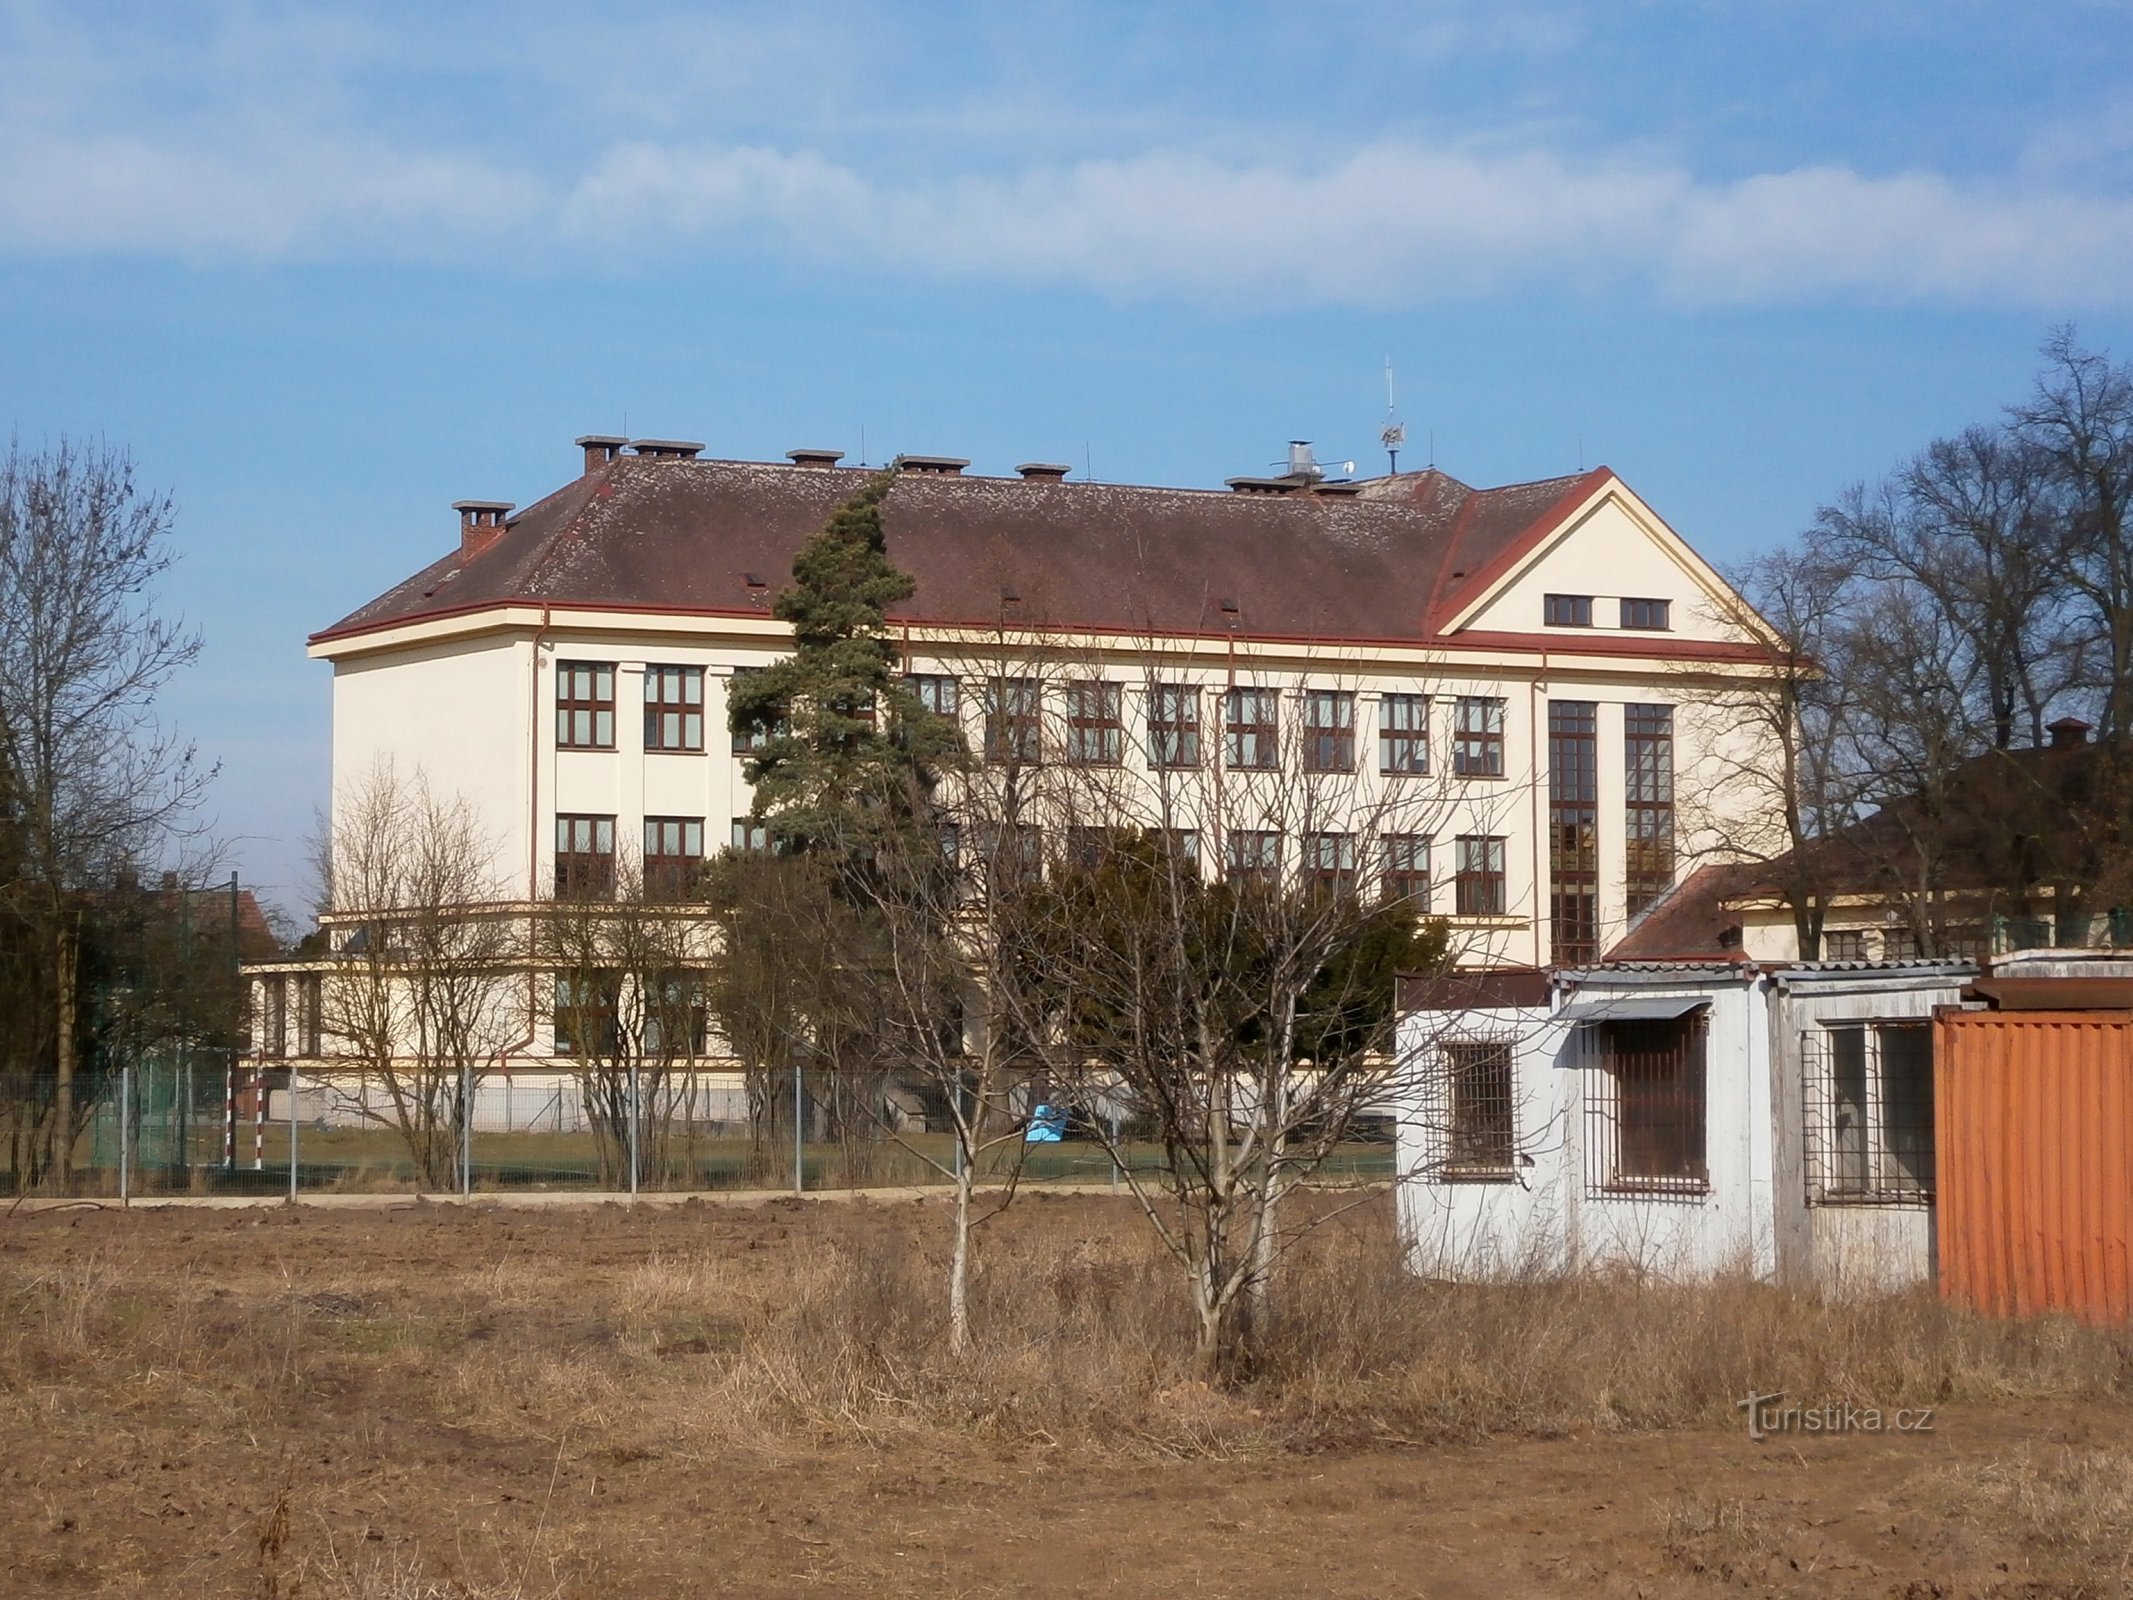 Basisschool Masaryk in Plotiště nad Labem (Hradec Králové, 9.3.2015/XNUMX/XNUMX)